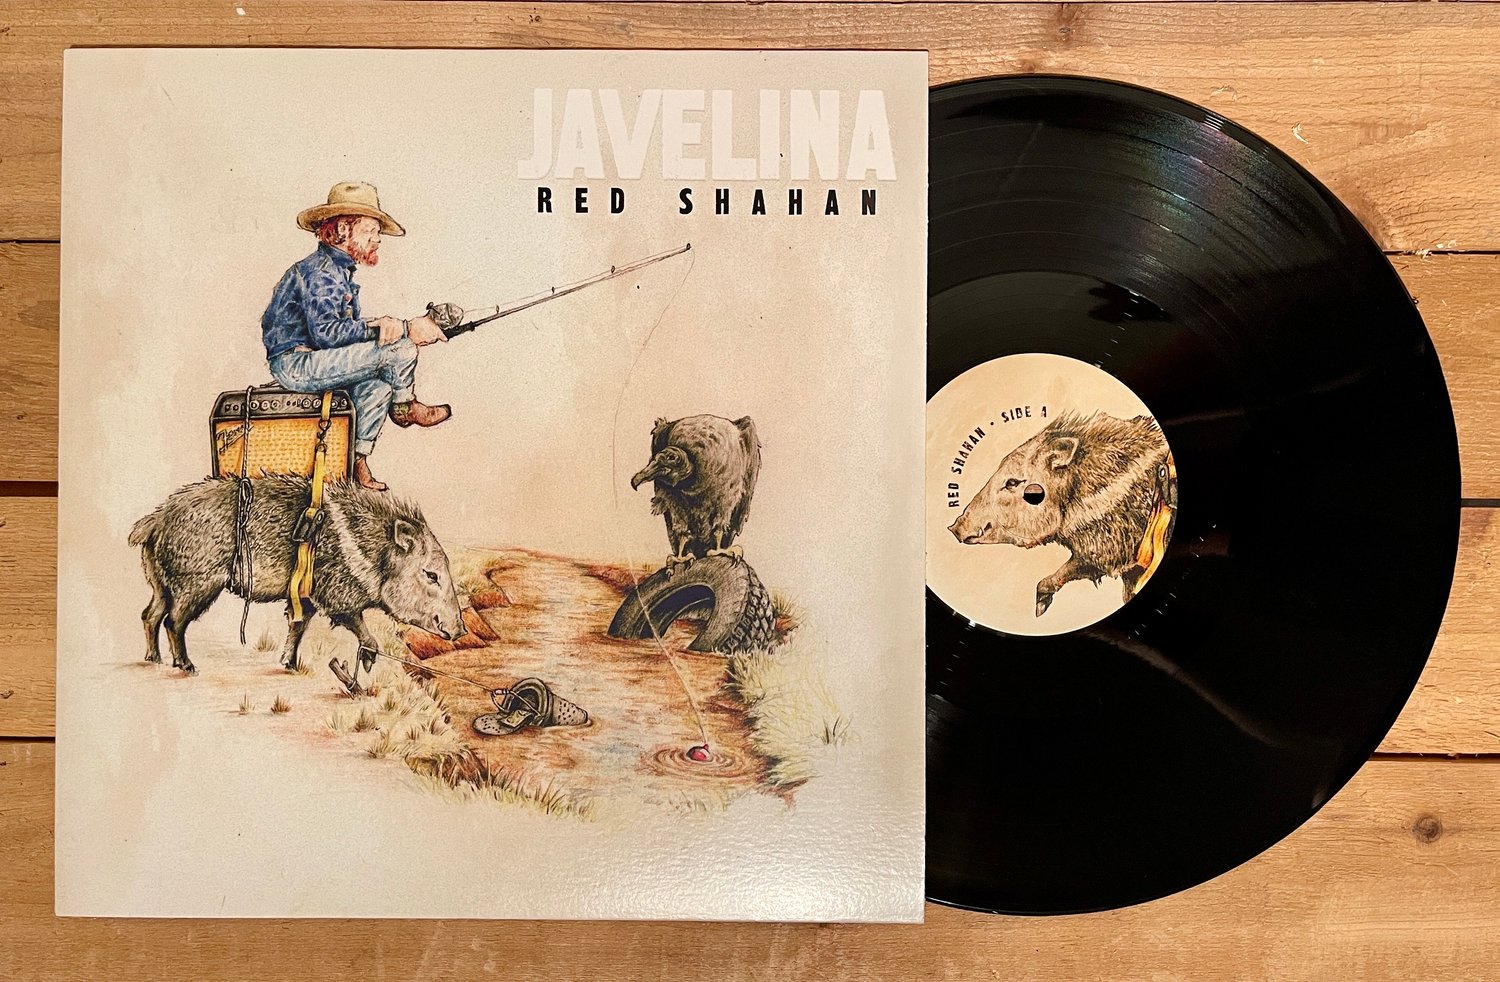 Image of Javelina Vinyl